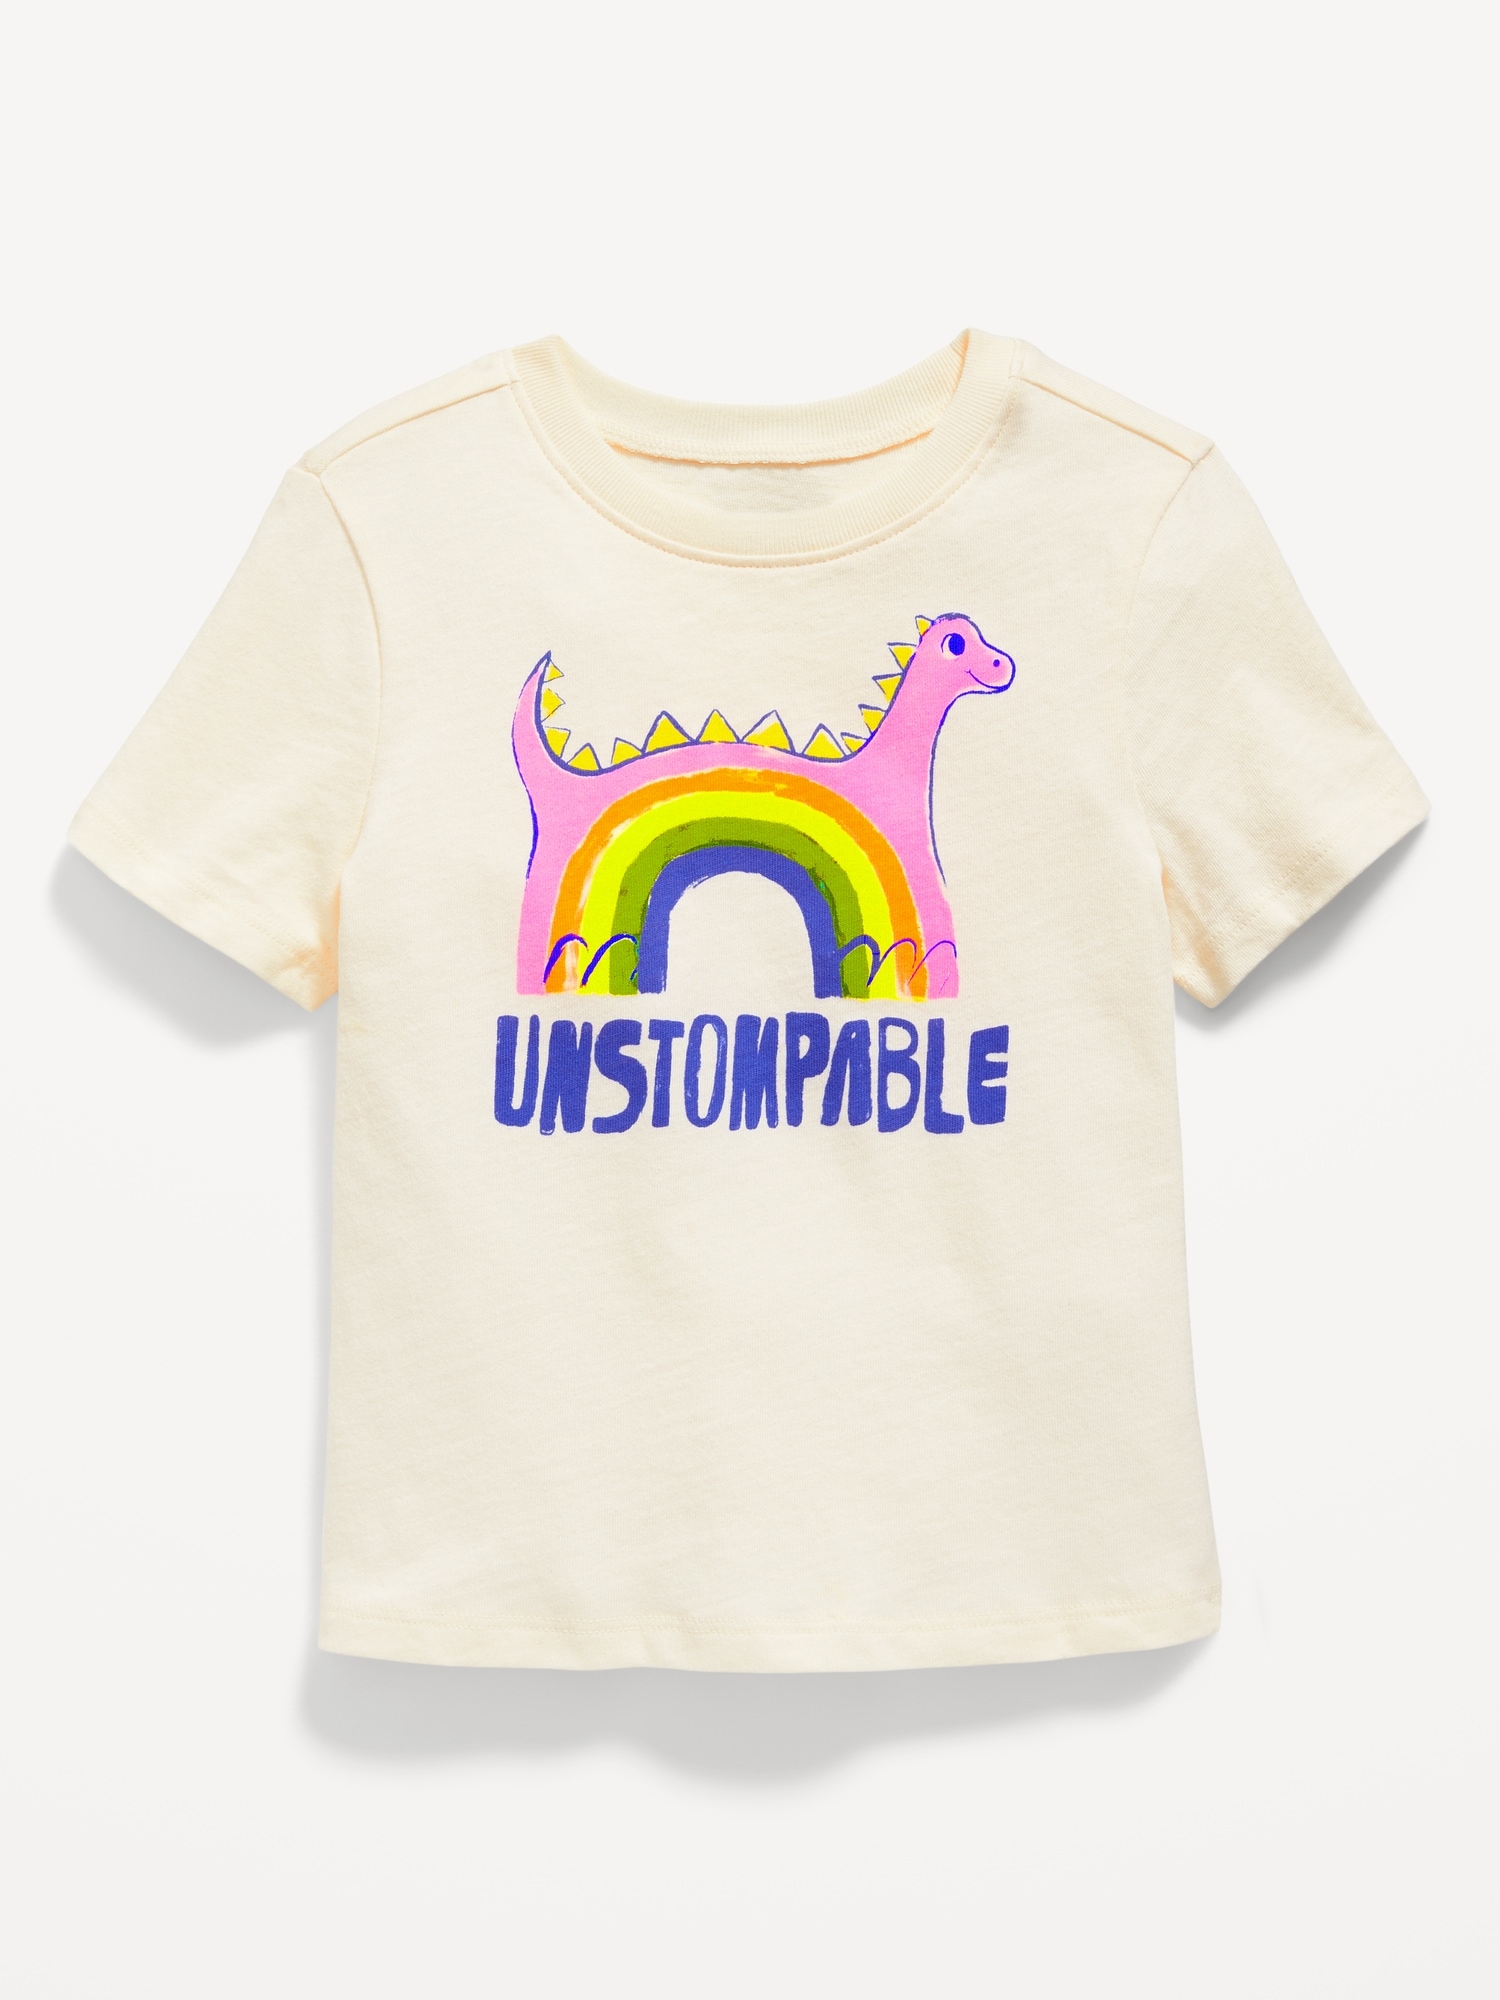 Unisex Short-Sleeve Graphic T-Shirt for Toddler